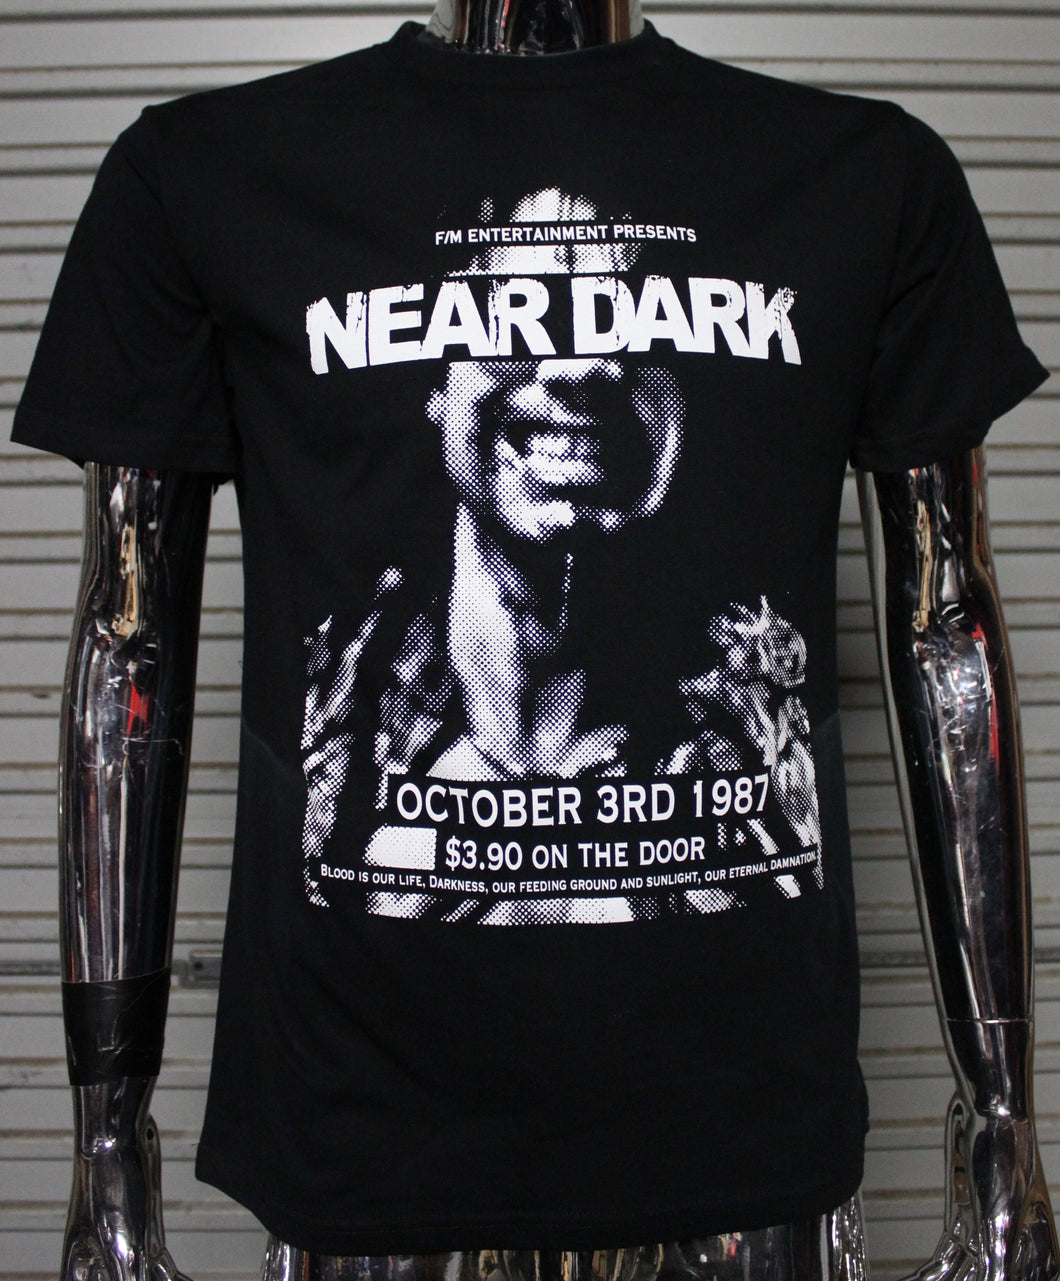 Near Dark DIY punk flyer T-shirt